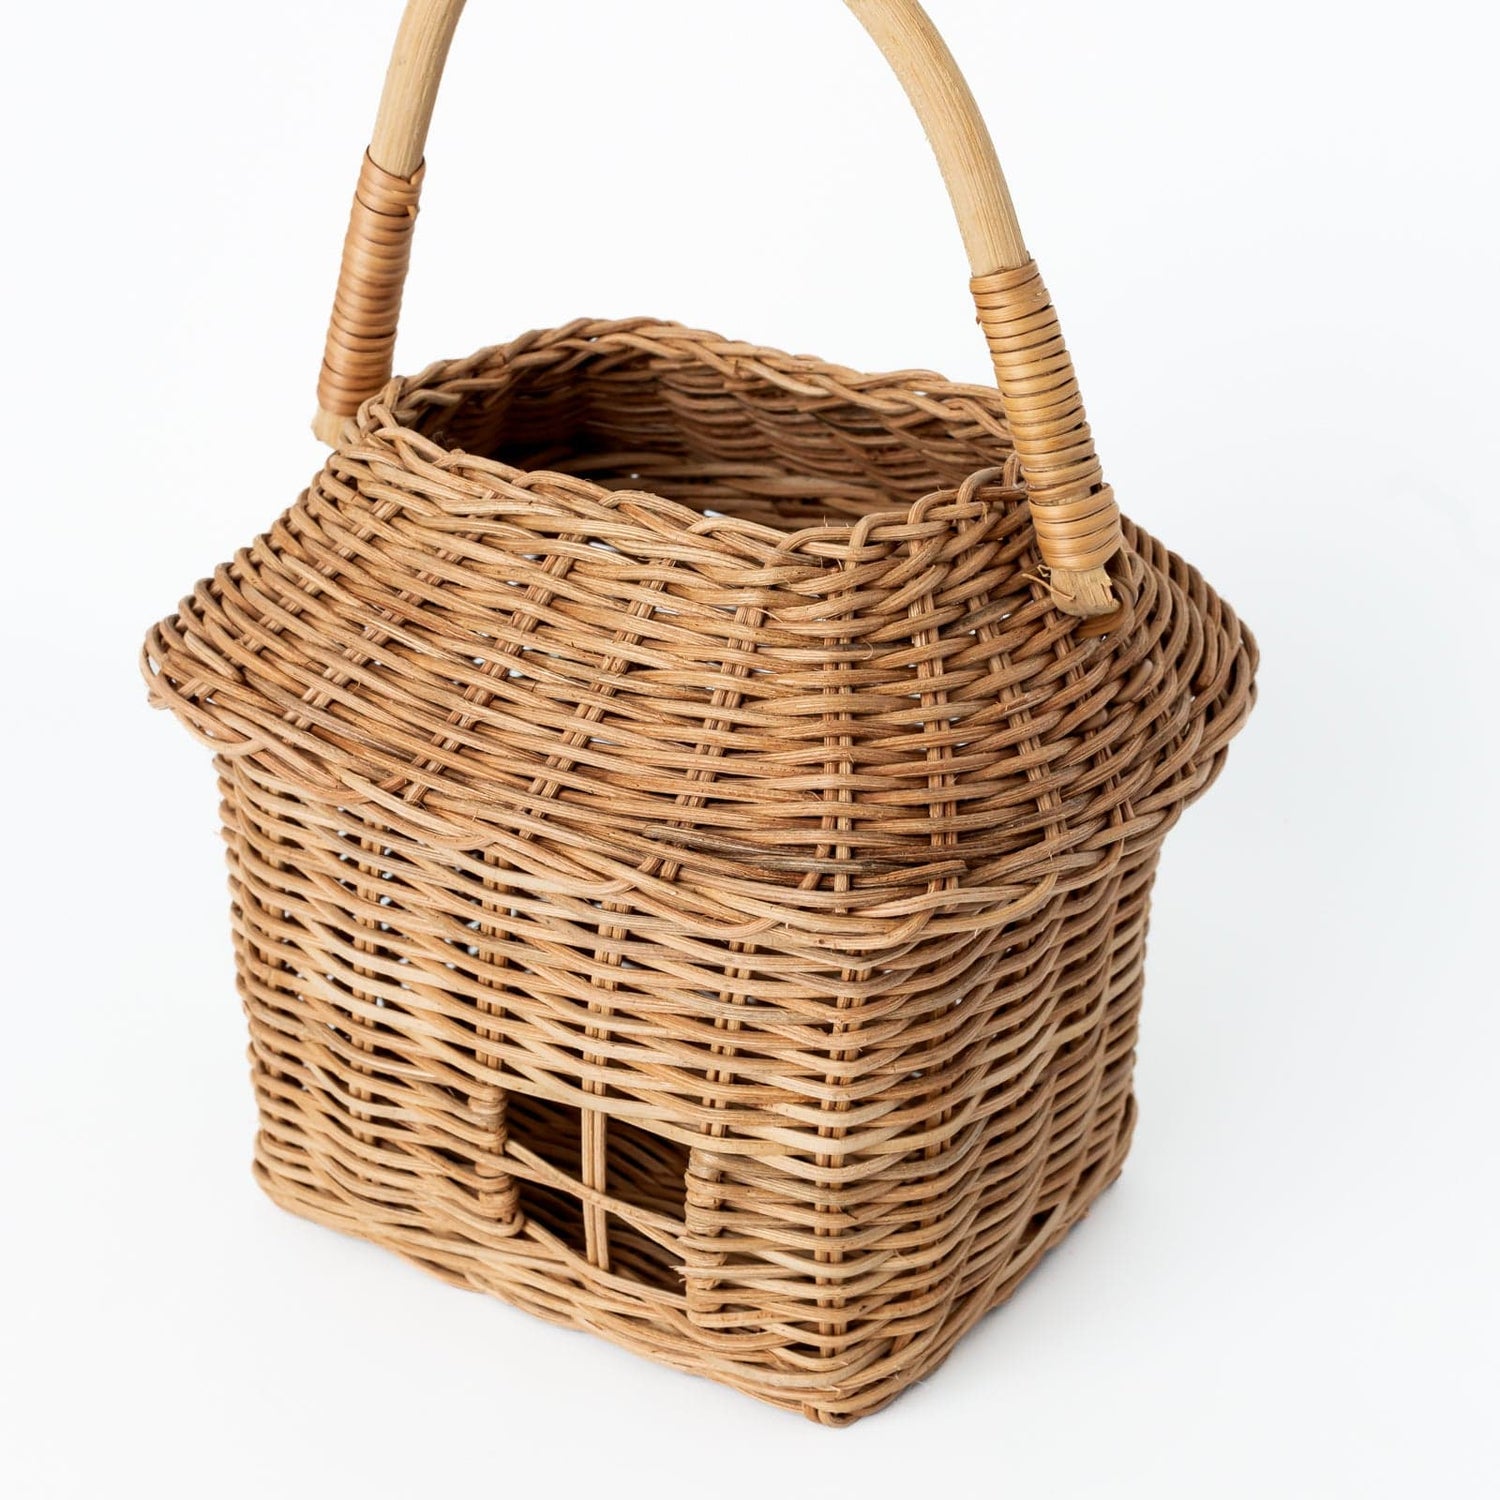 Olli Ella Rattan Rattan Hutch Basket (Small) by Olli Ella Olli Ella Rattan Berry Basket I Rattan Nursery Decor